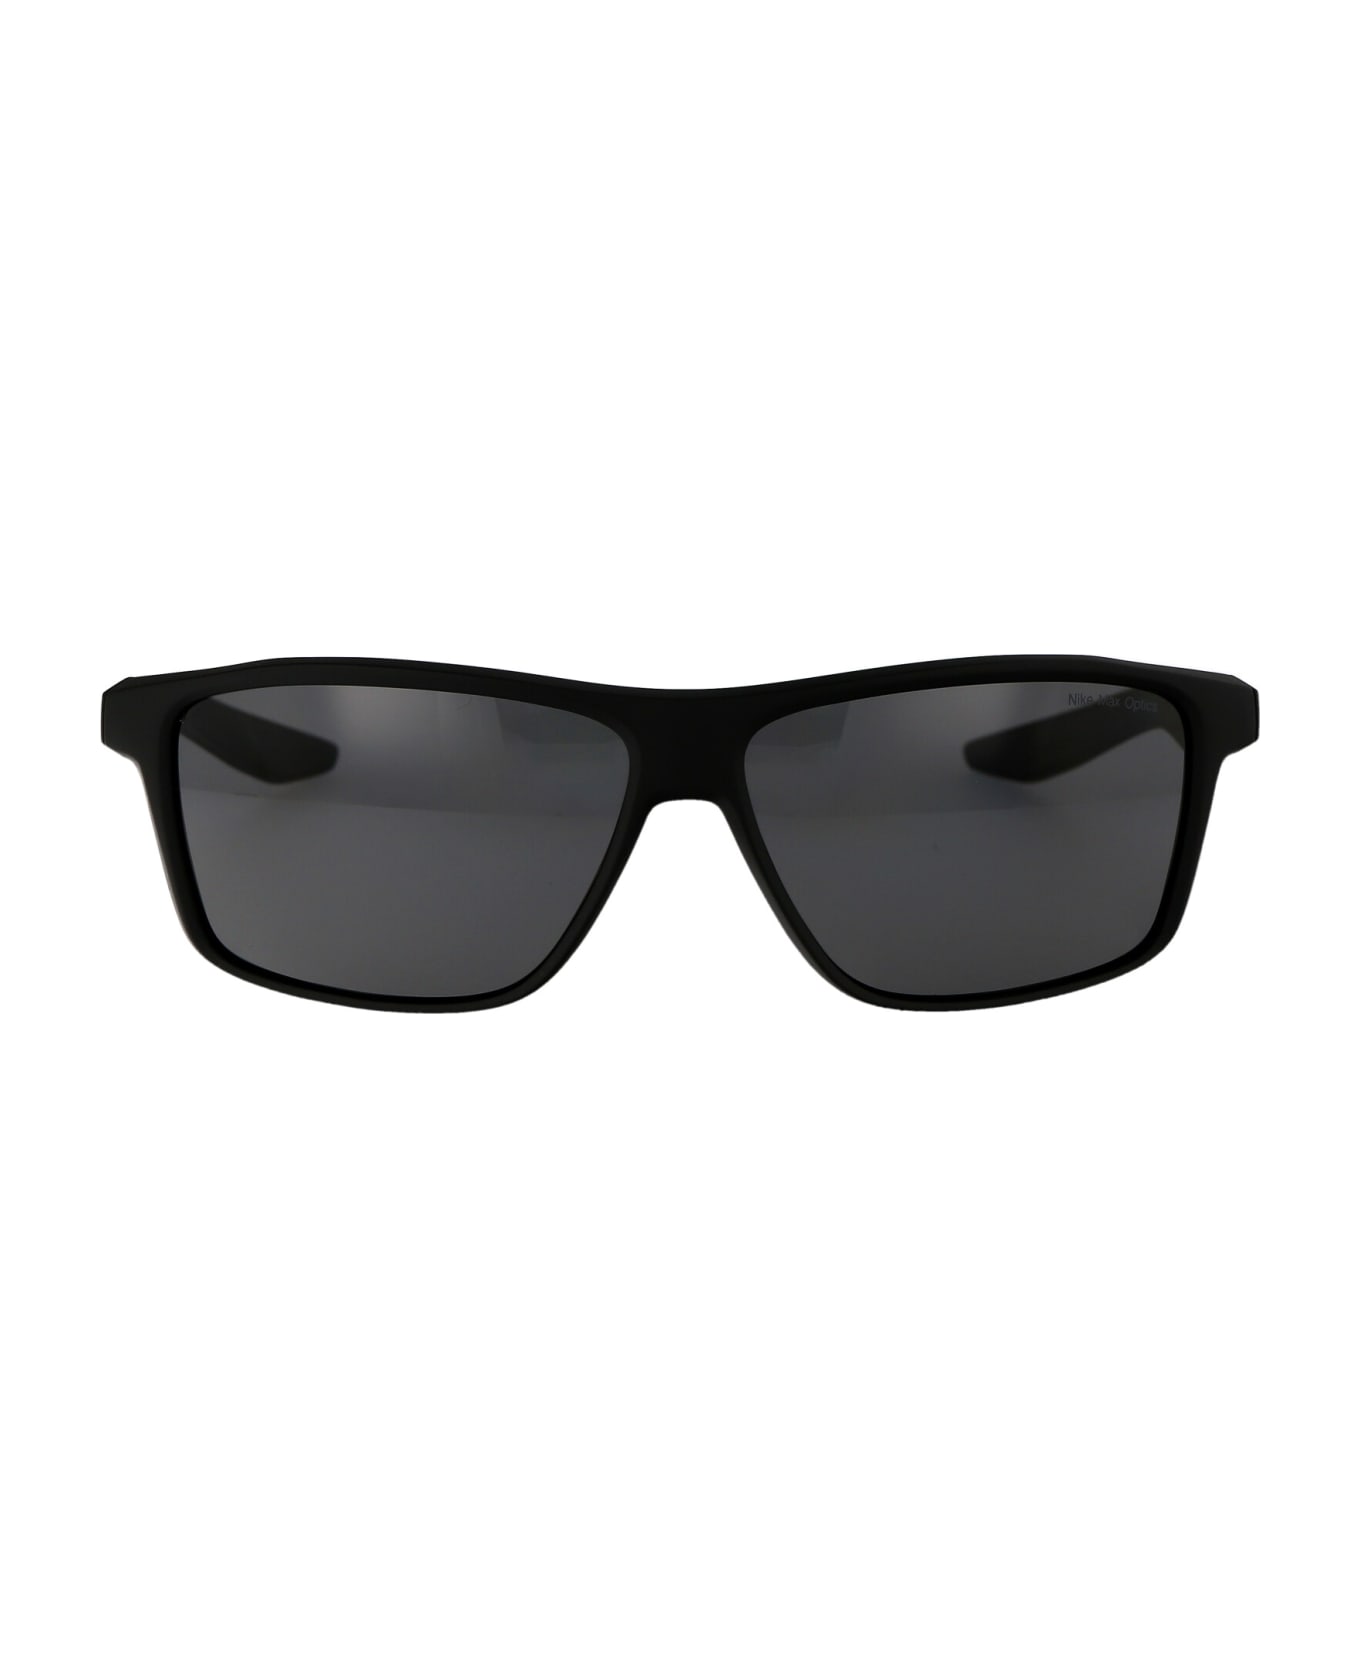 Nike Premier Sunglasses - 001 DARK GREY BLACK/ ANTHRACITE